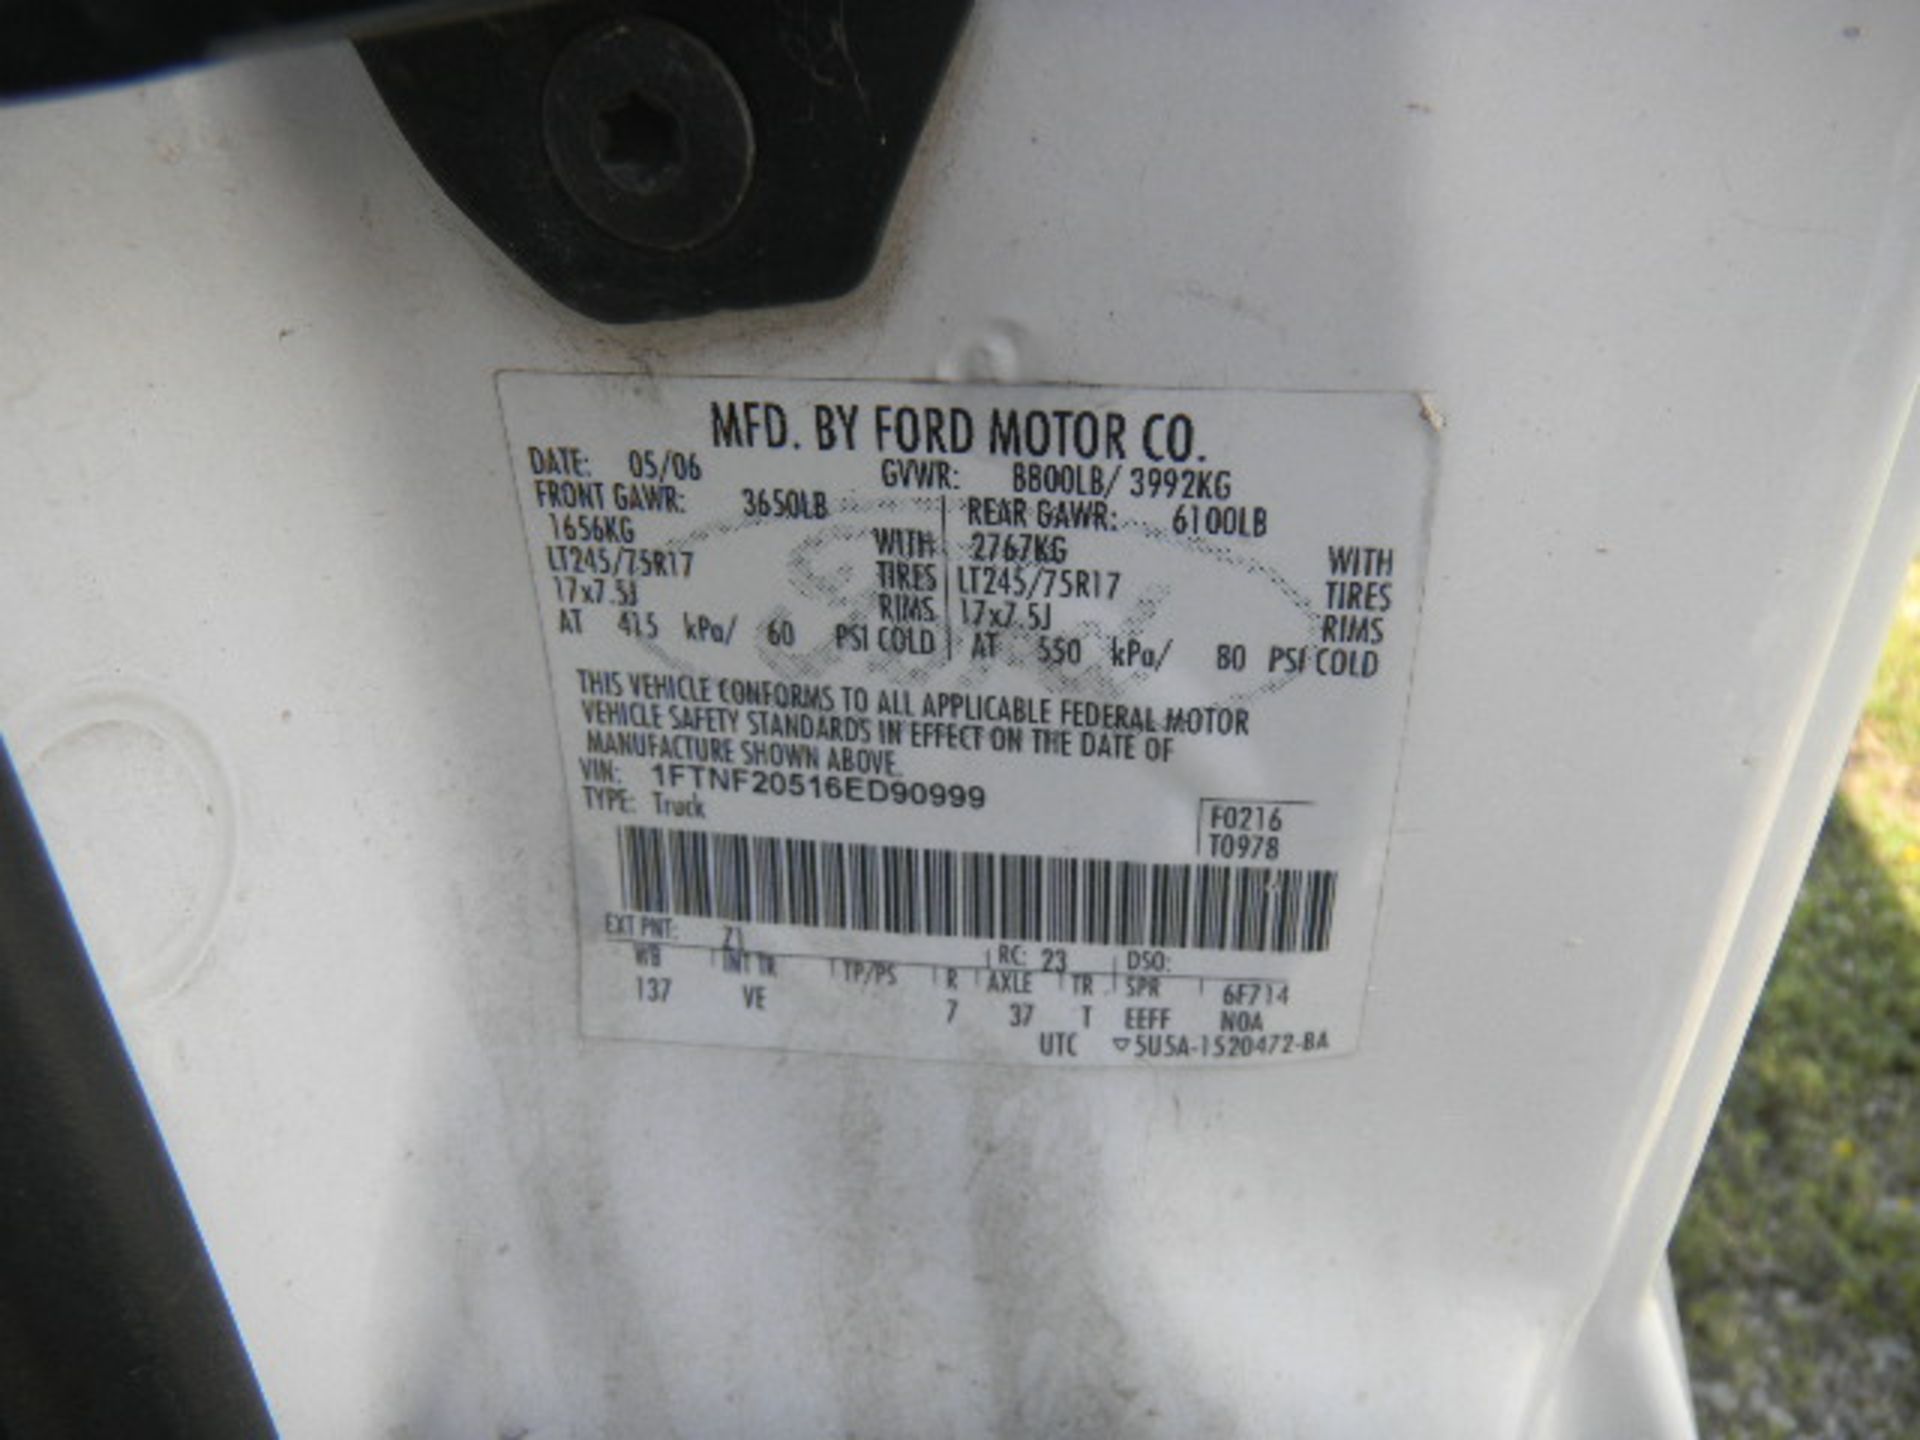 2006 Ford F250 "Sign Truck" With Metal Rack & Compressor - Asset I.D. #945 - Last of Vin (D90999) - Image 8 of 8